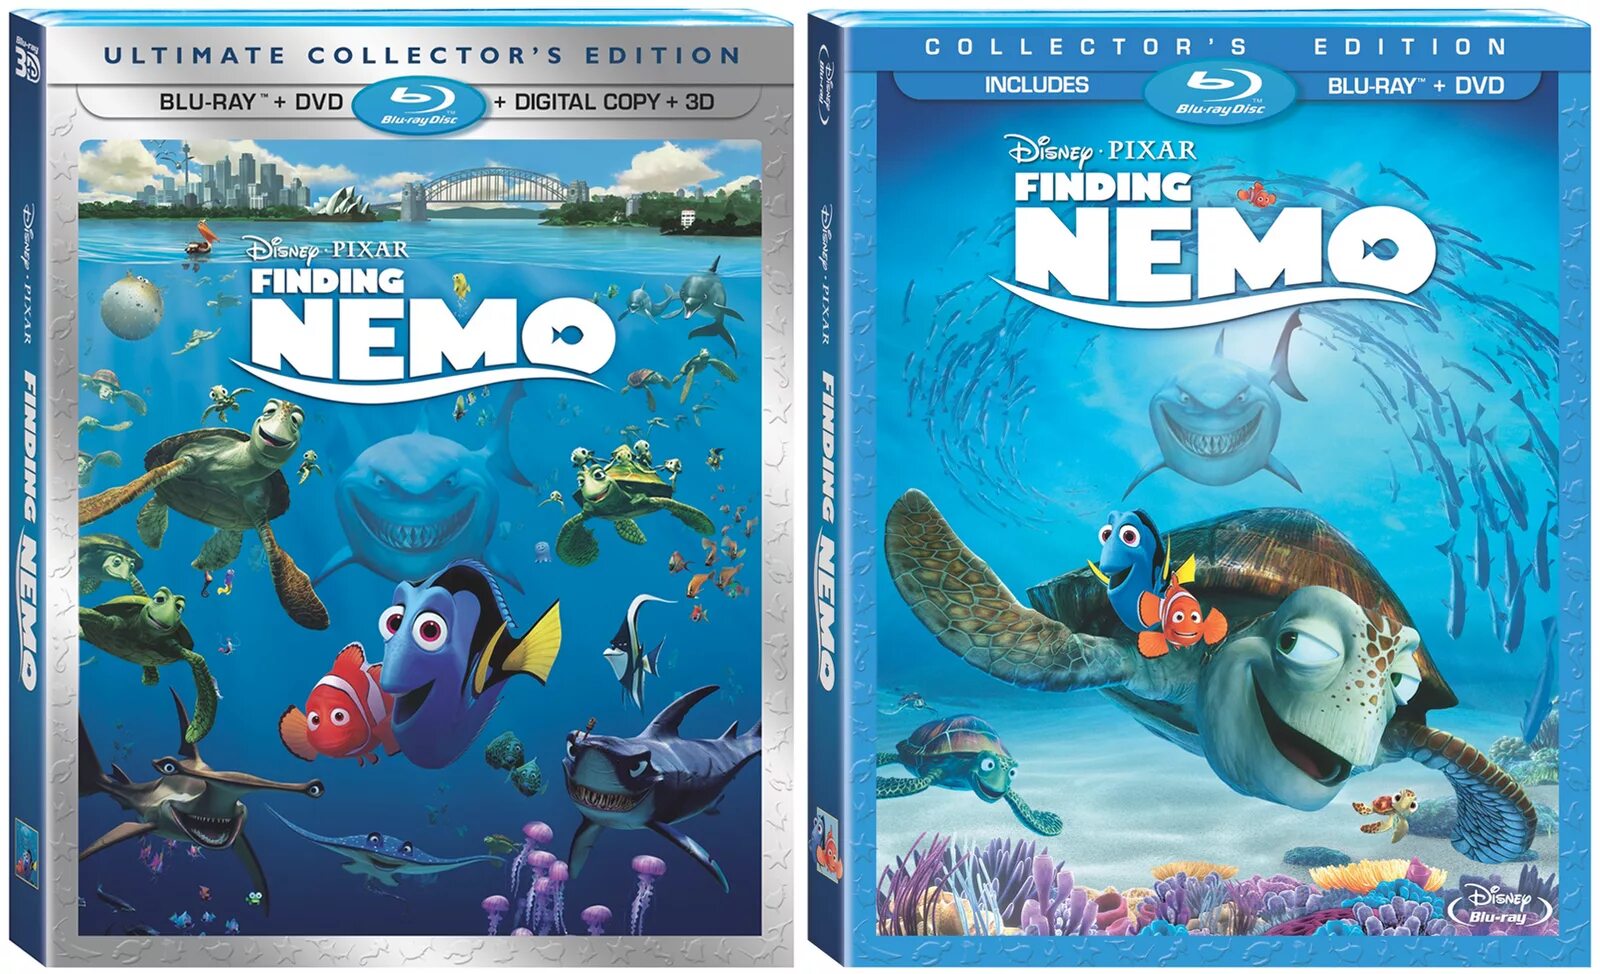 Немо на английском с английскими субтитрами. В поисках Немо Blu ray 3d. Finding Nemo 2003 Blu ray. Blu ray Disc finding Nemo. Пиксар Немо.